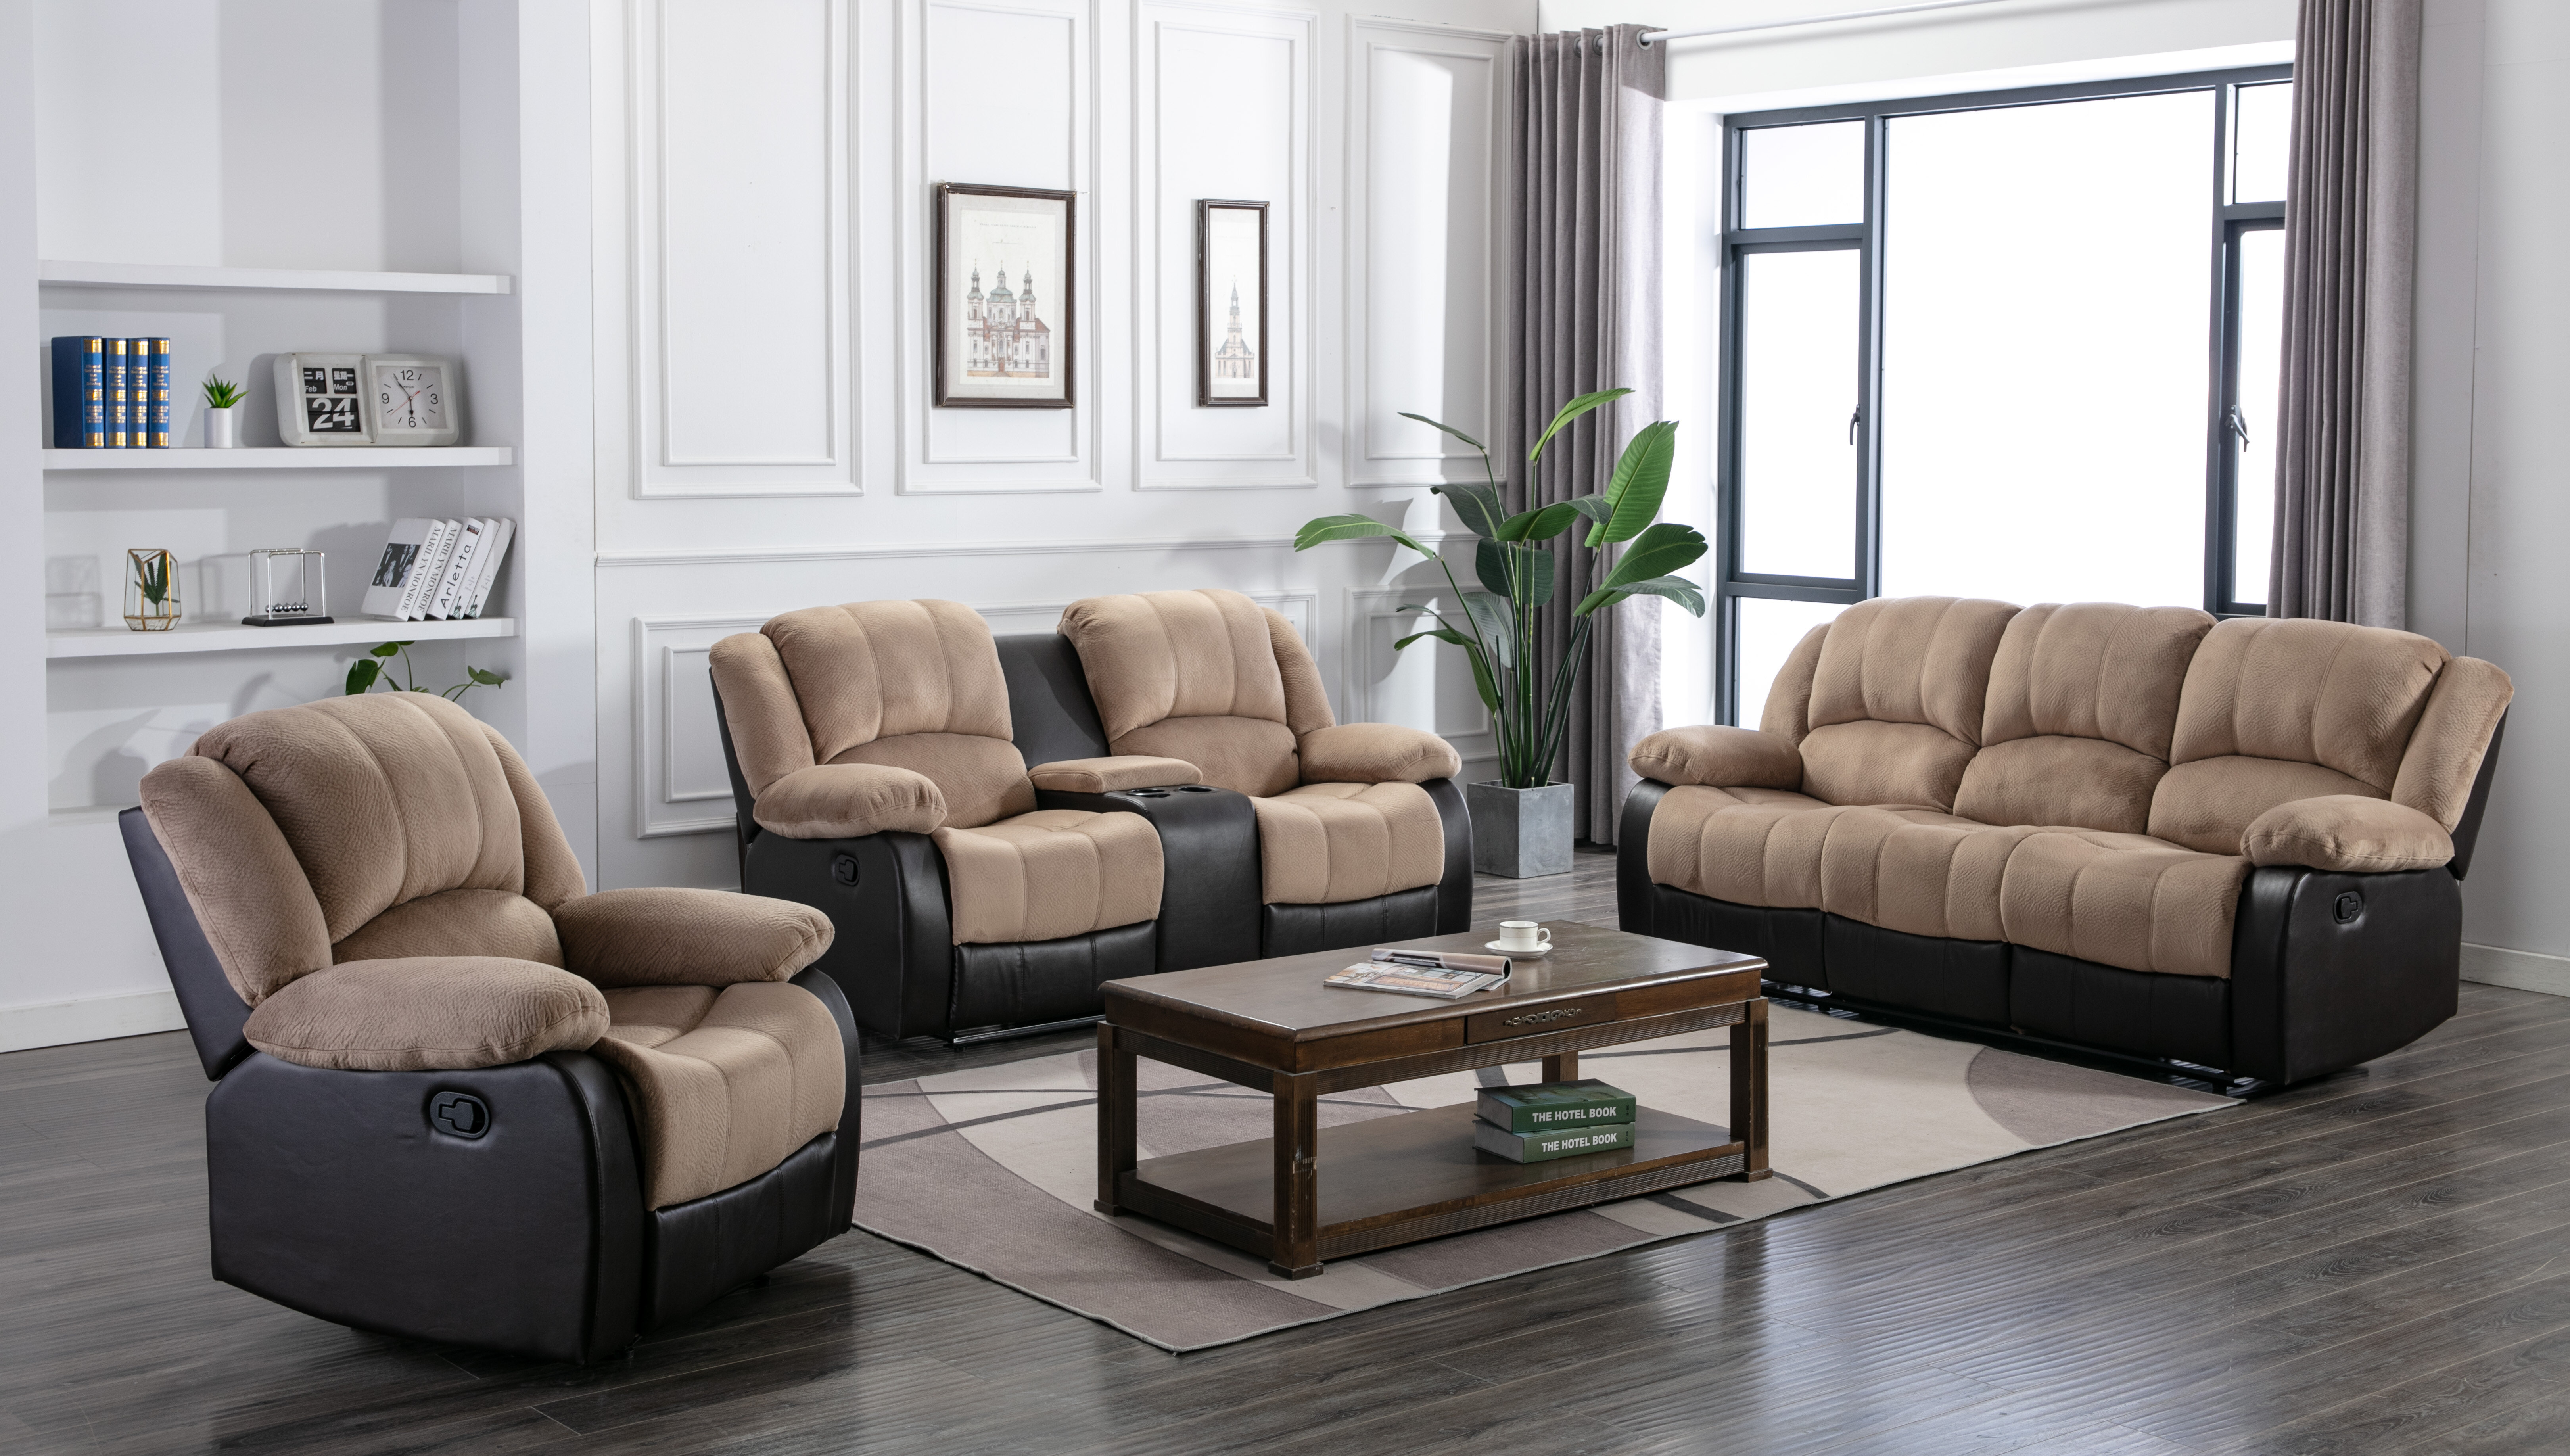 Winston Porter Perrysburg 3 Piece Leather Match Reclining Living Room Set Reviews Wayfair